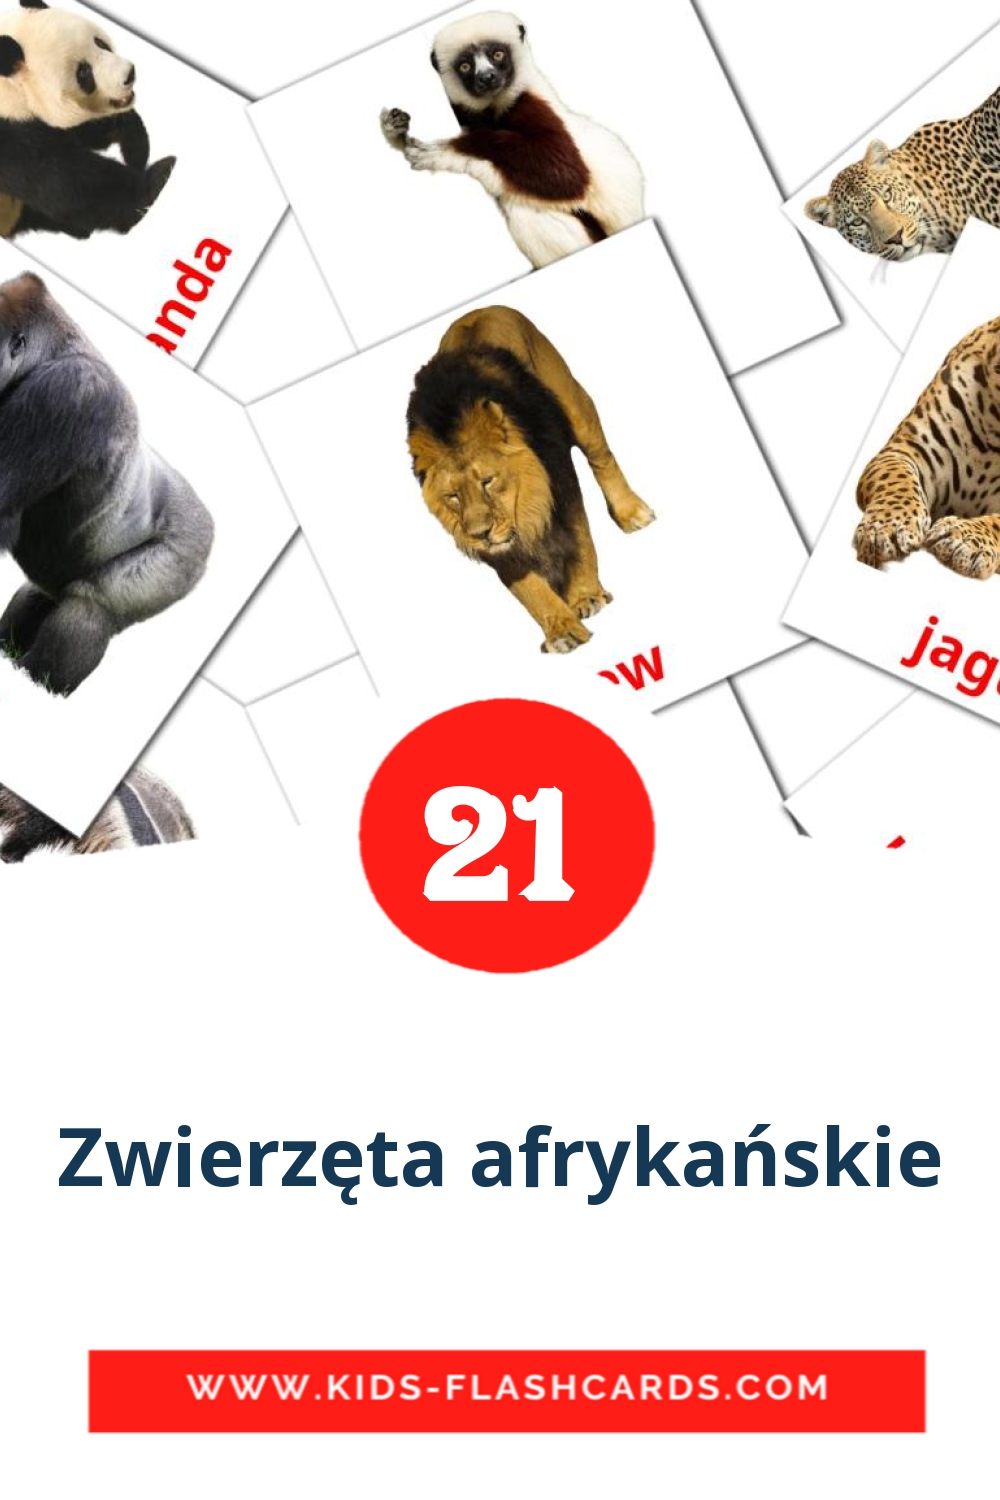 21 carte illustrate di Zwierzęta afrykańskie per la scuola materna in inglês